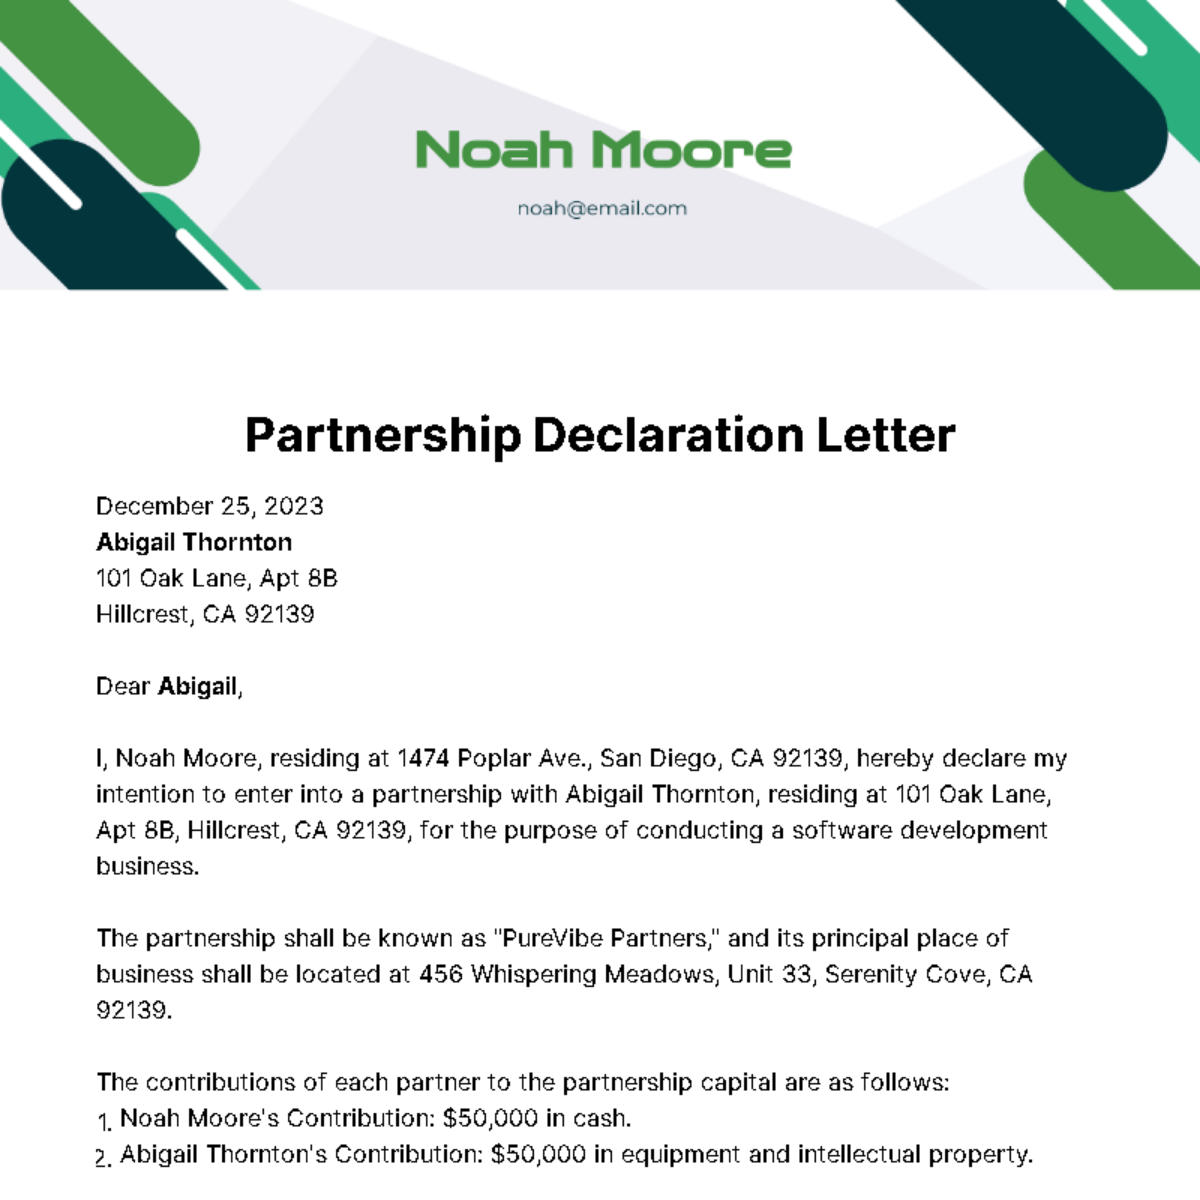 Free Partnership Declaration Letter